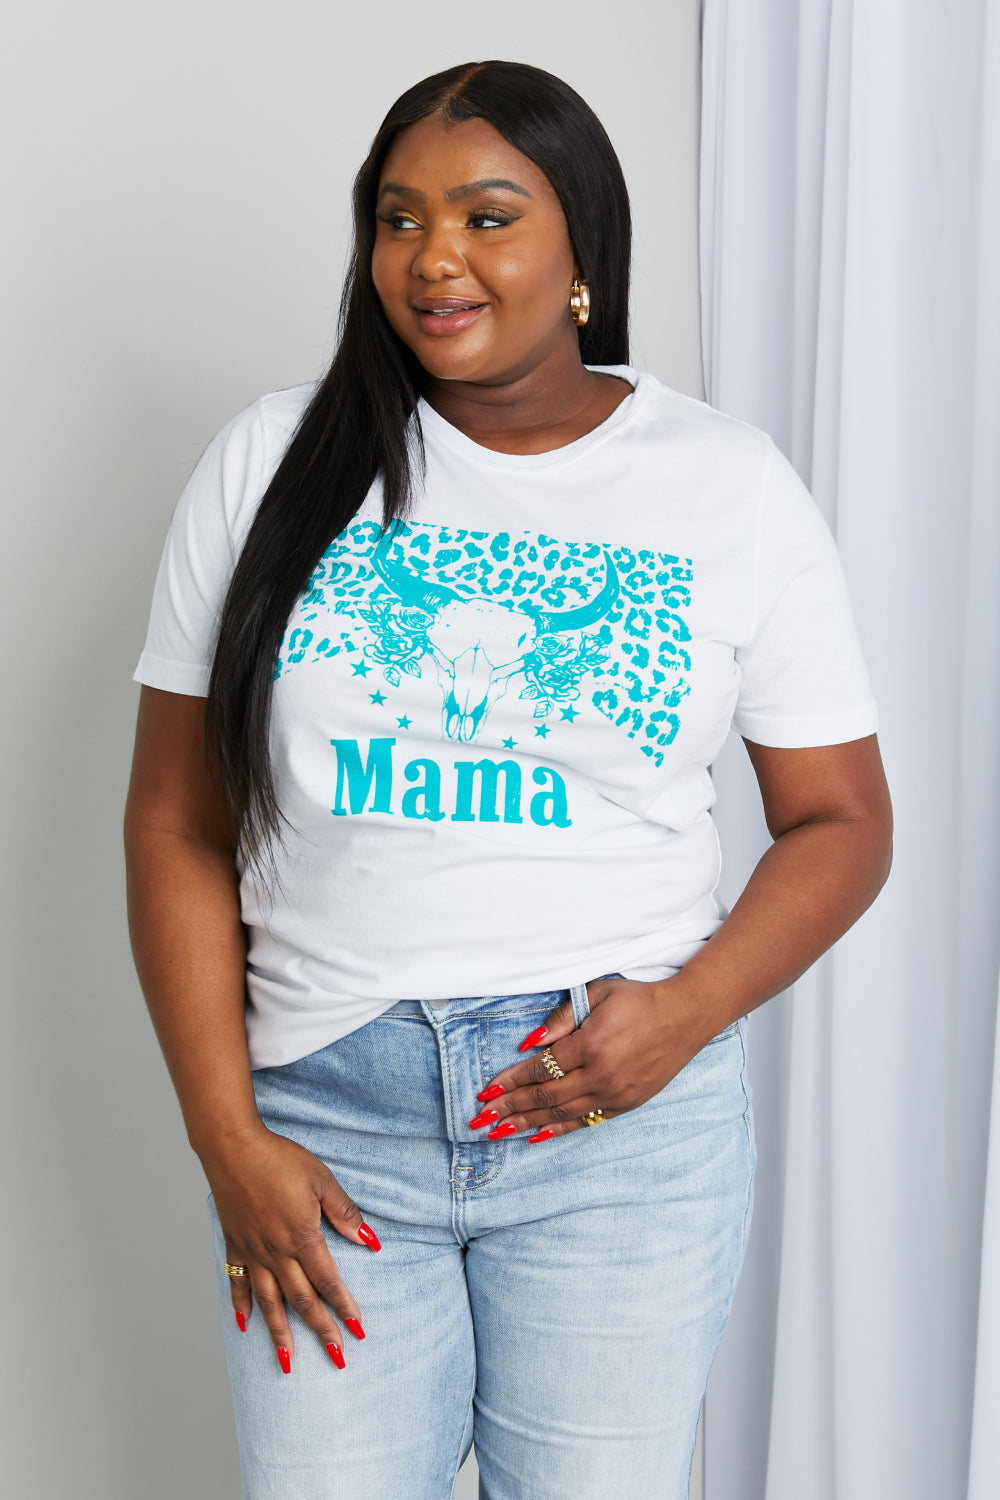 mineB Full Size MAMA Animal Graphic Tee Shirt